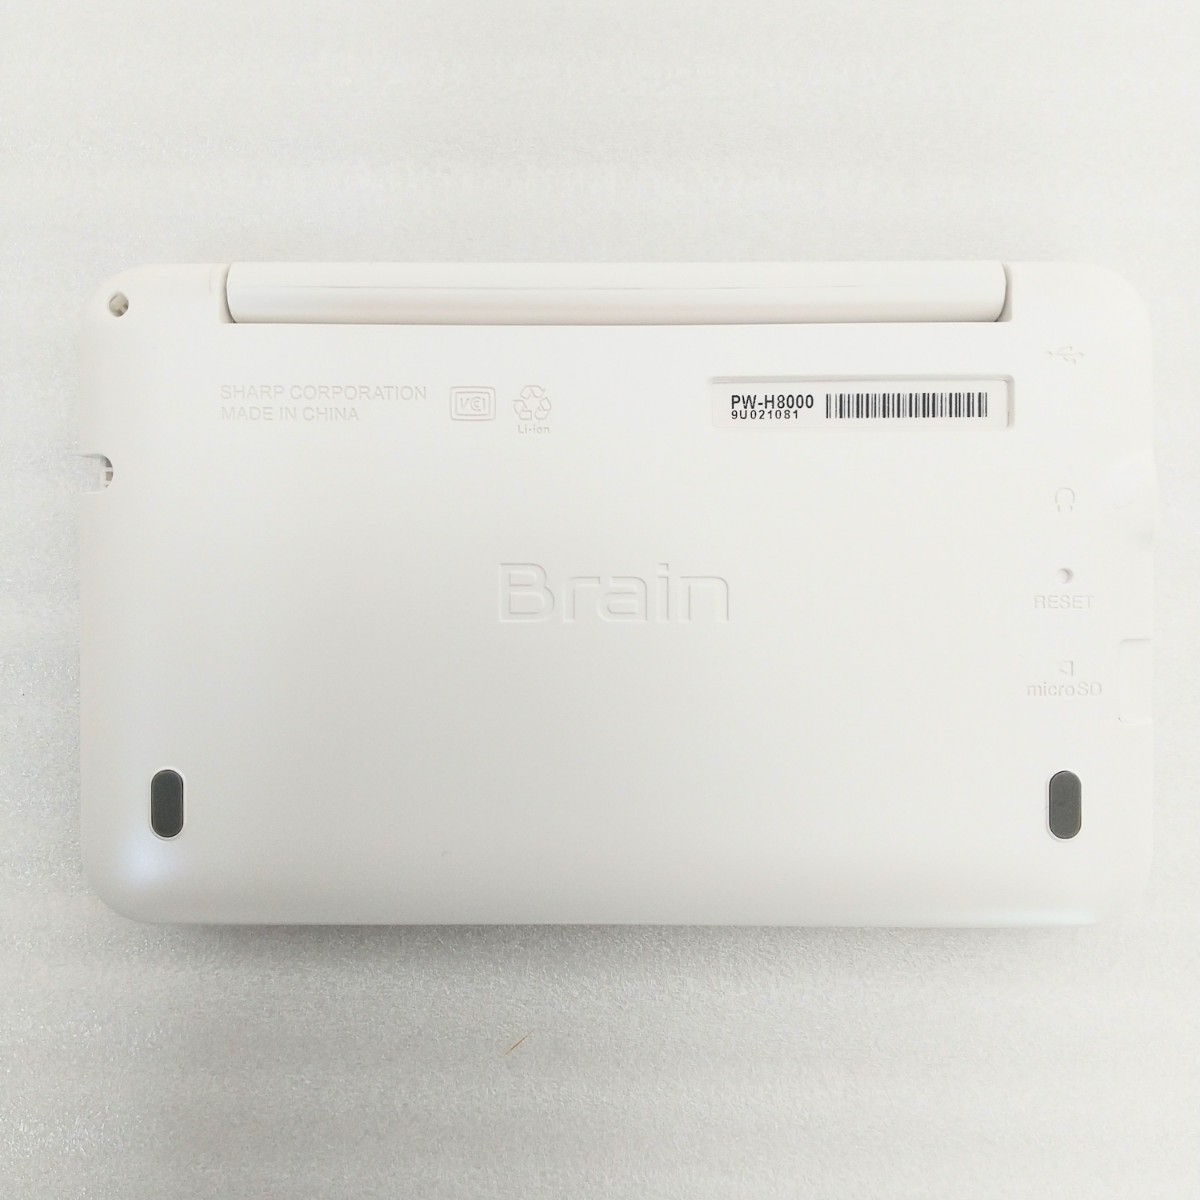 SHARP カラー電子辞書 Brain PW-H8000 電子辞書 | alimentartn.com.br